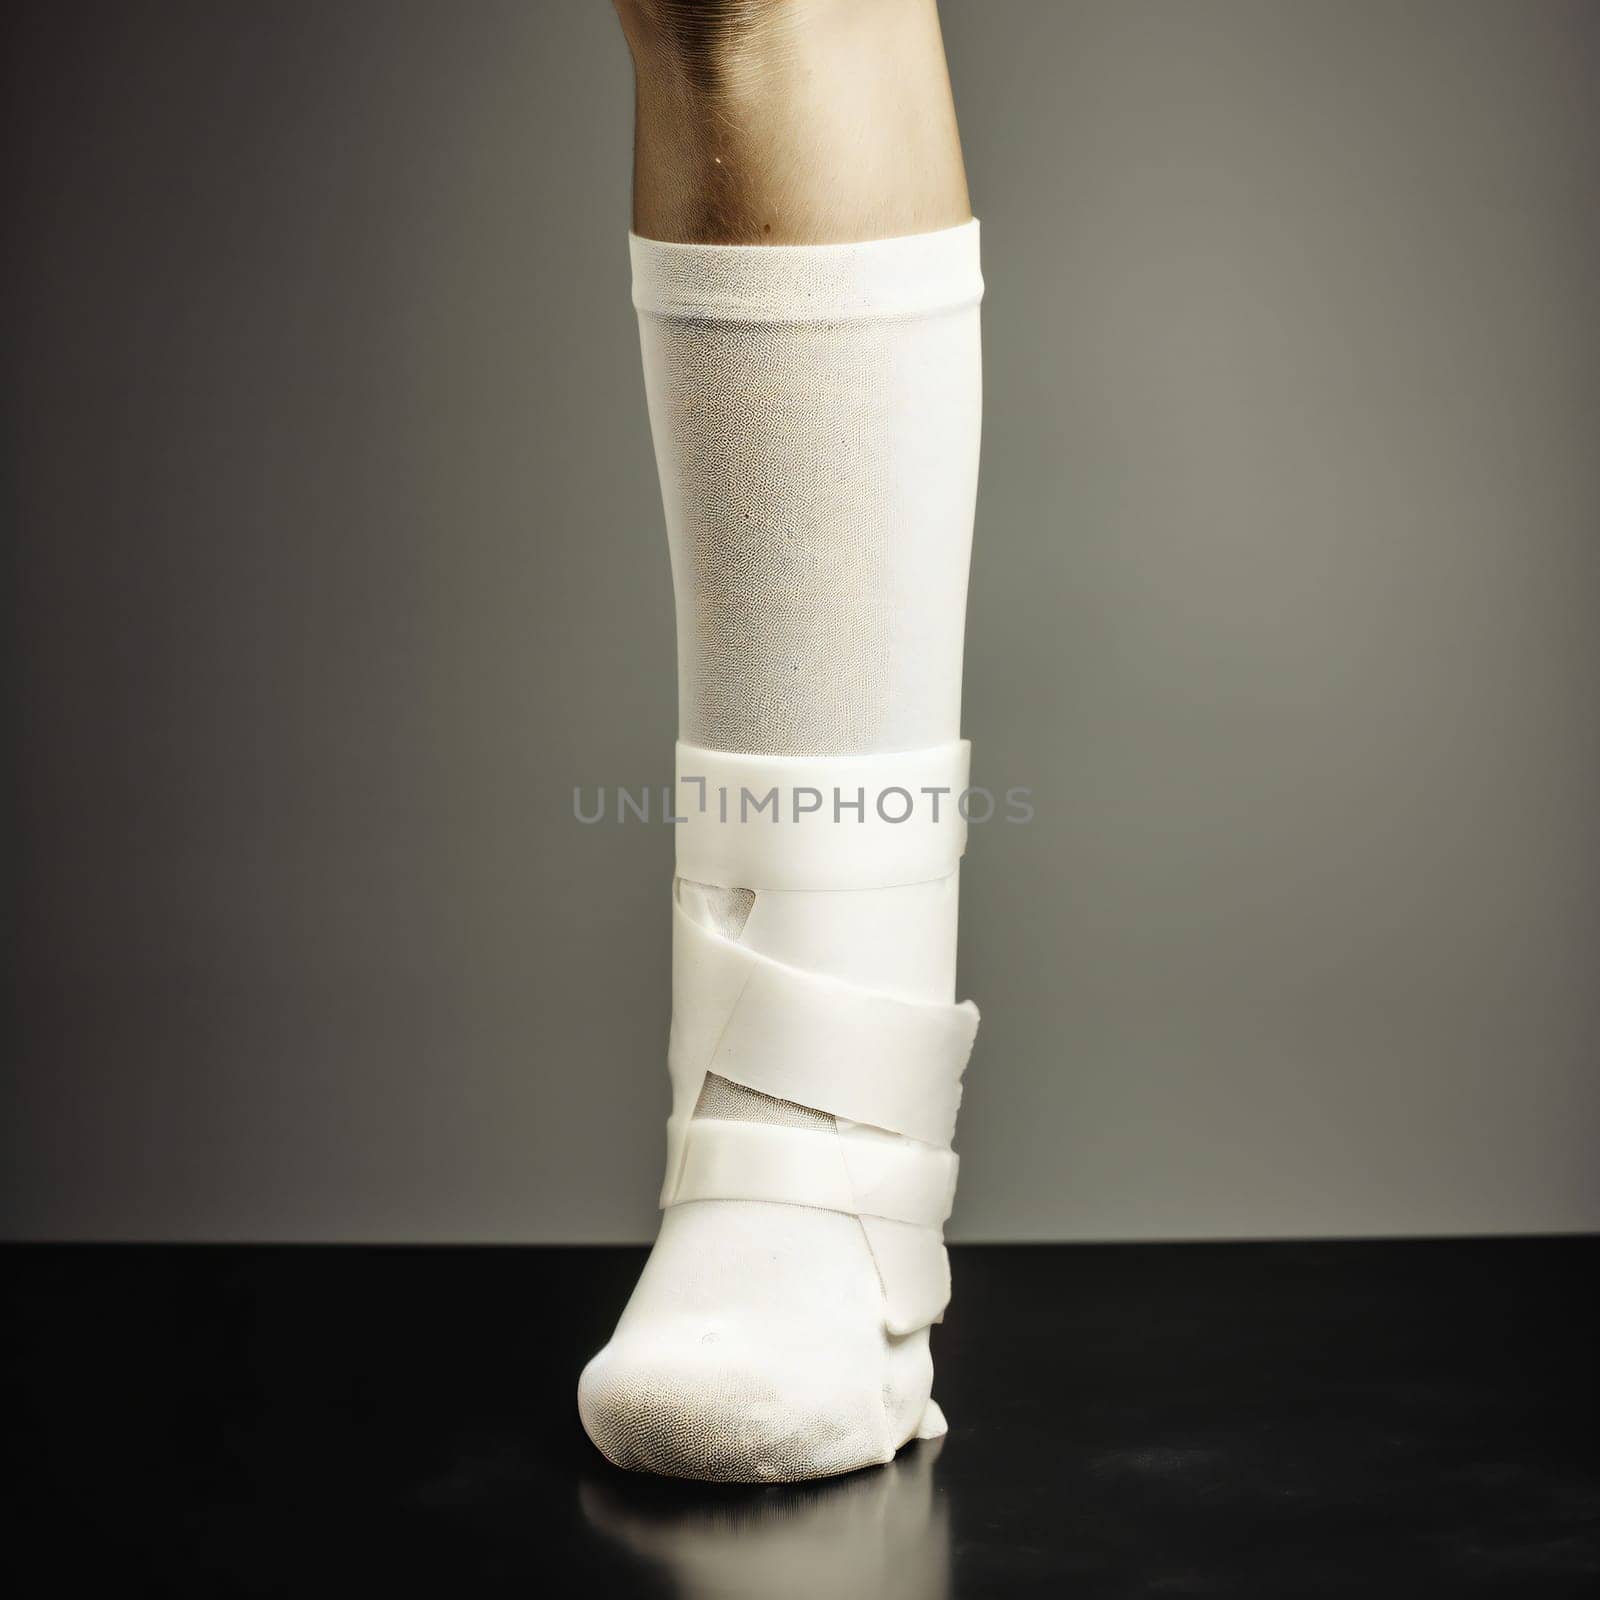 broken leg. leg in a cast on isolated dark background